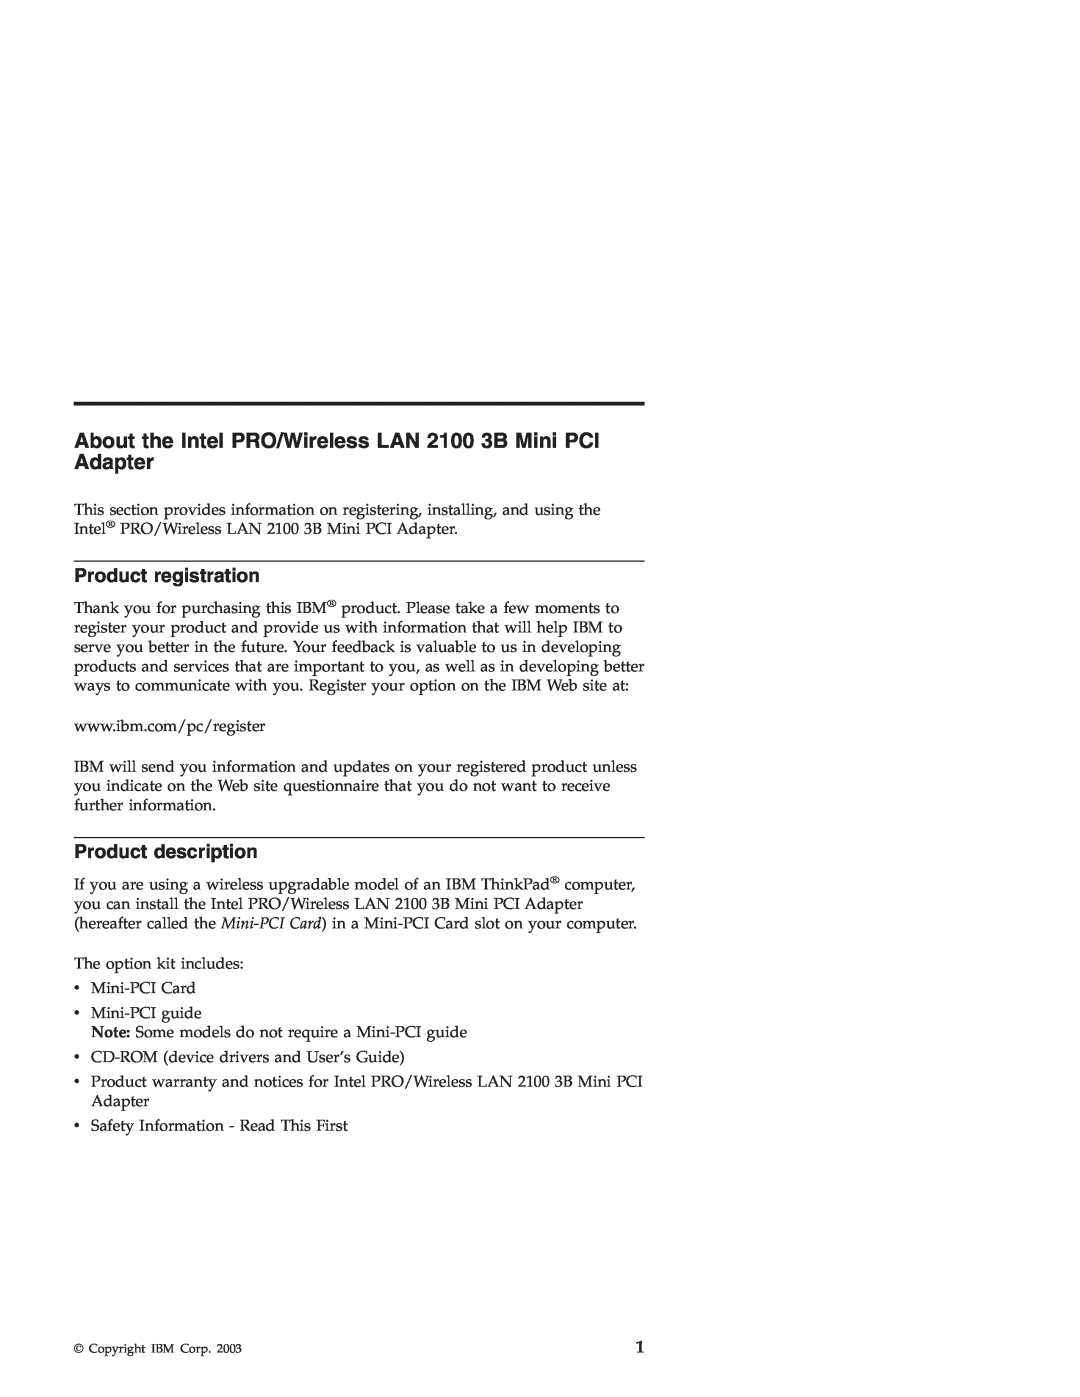 IBM manual About the Intel PRO/Wireless LAN 2100 3B Mini PCI Adapter, Product registration, Product description 